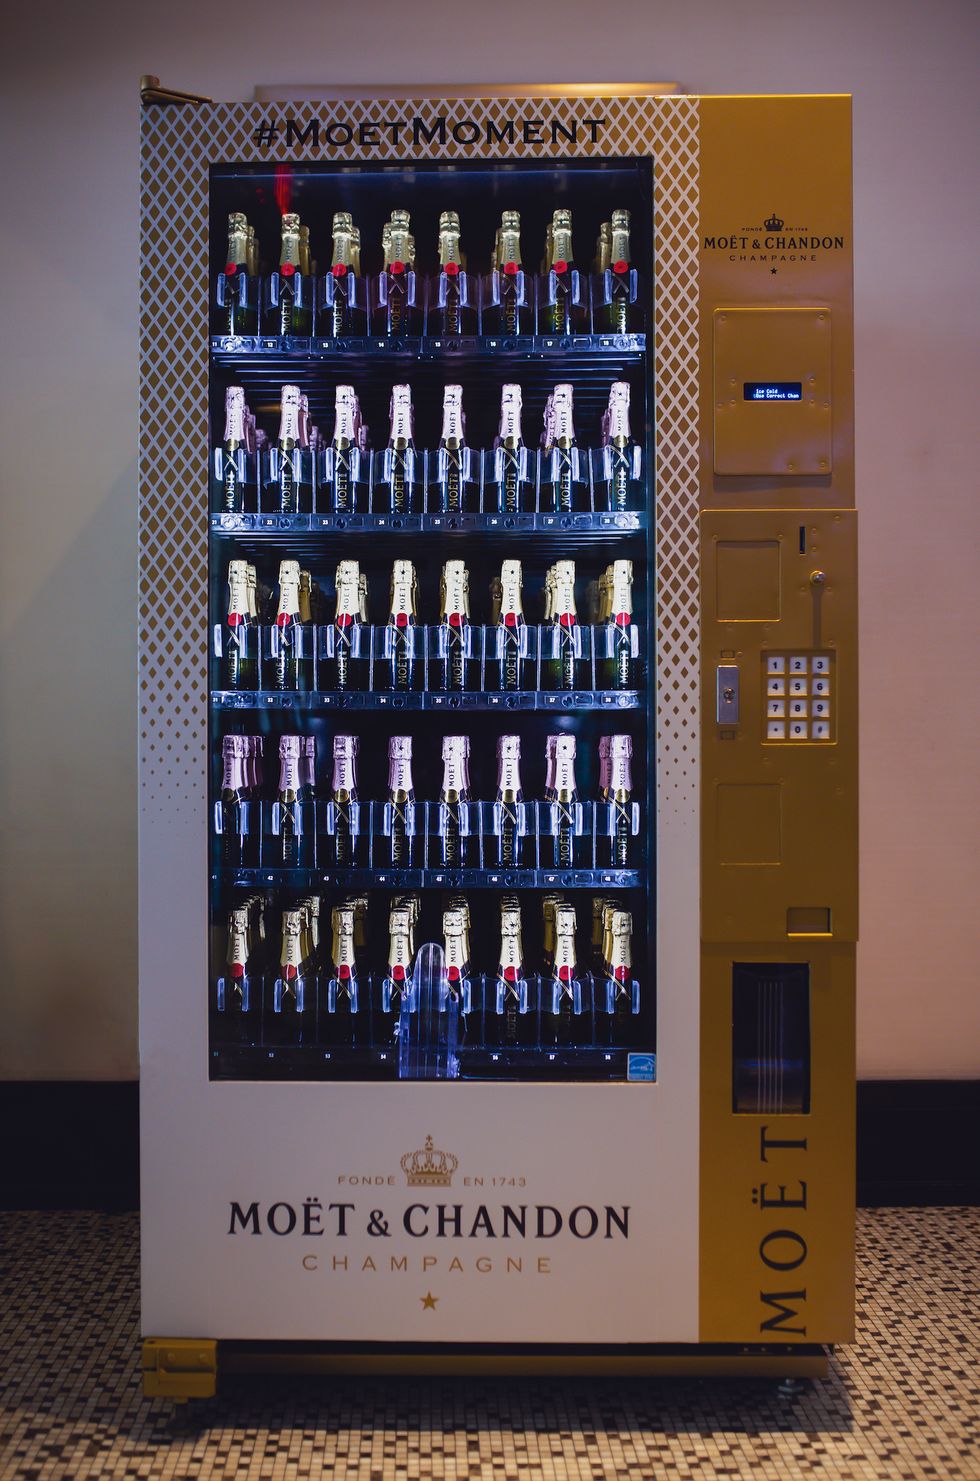 Moët & Chandon: Innovation, Innovation, Innovation - Buy Champagne